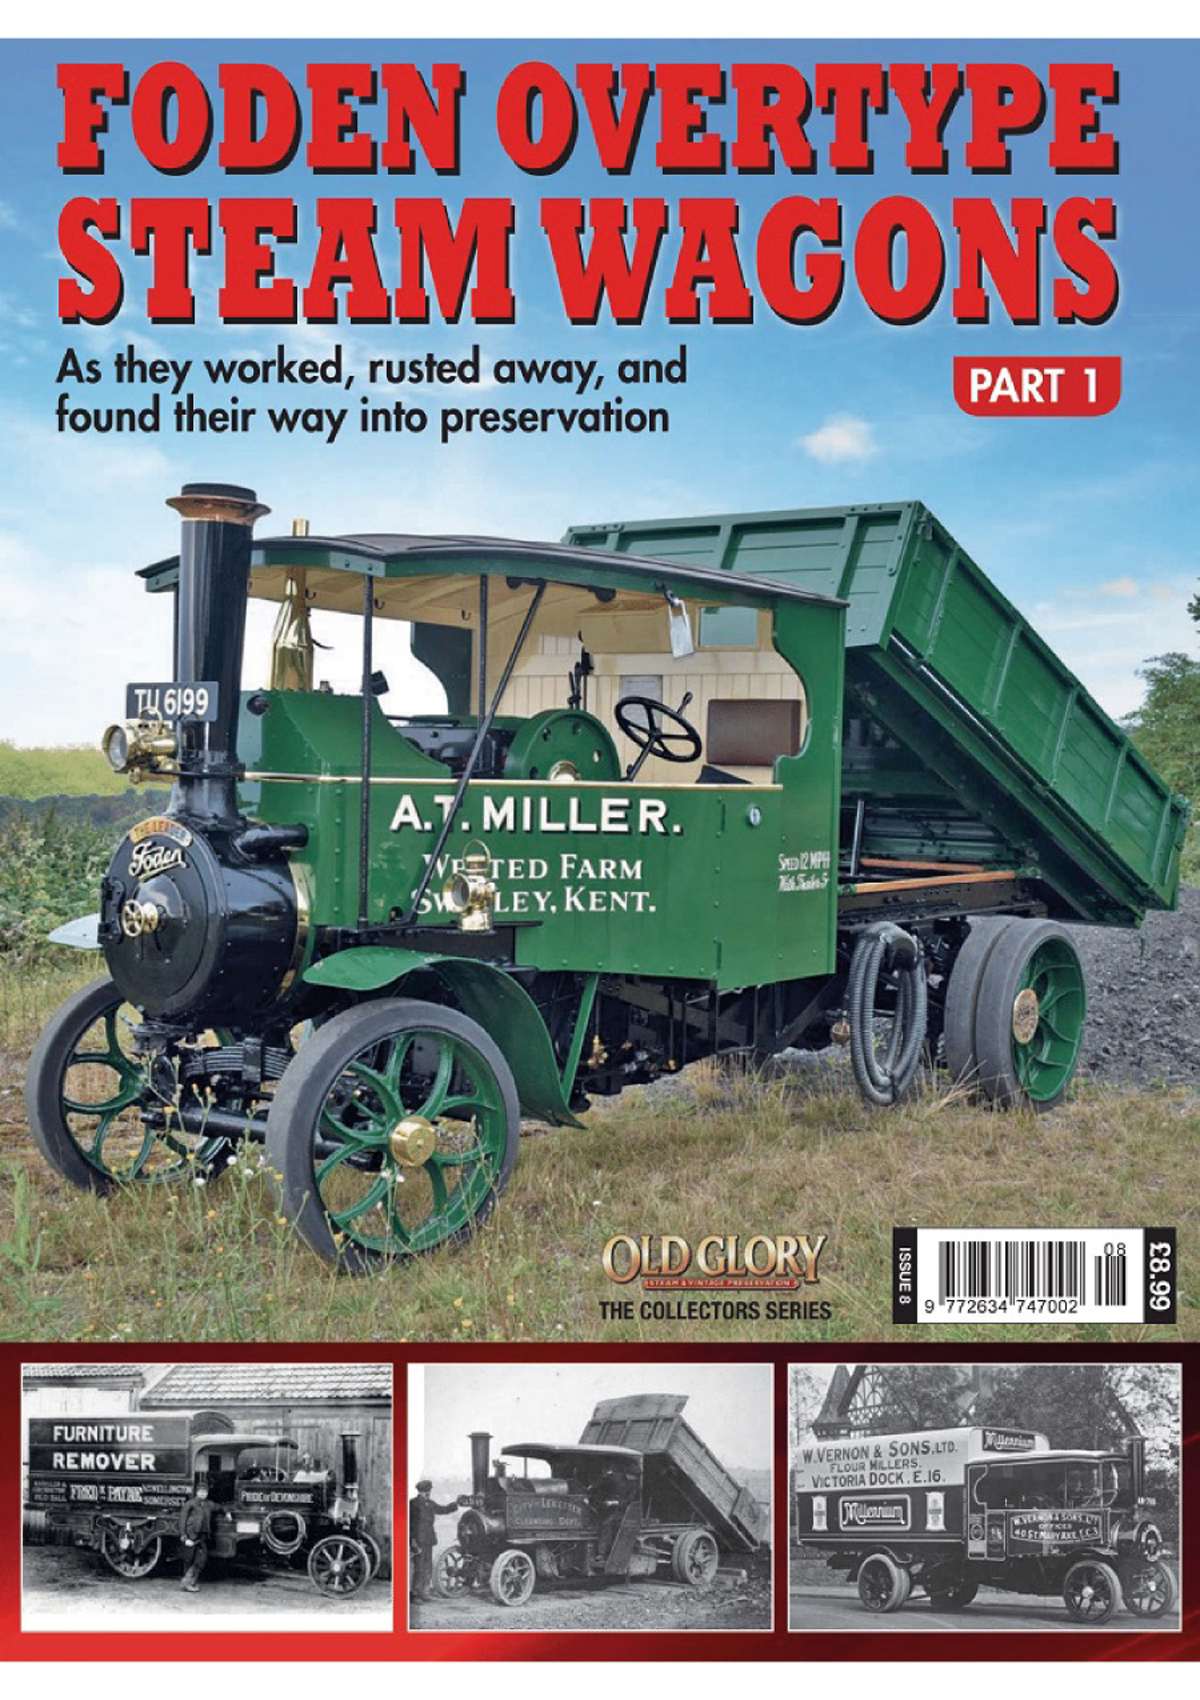 Steam Wagons Part 1 - Foden Overtype
